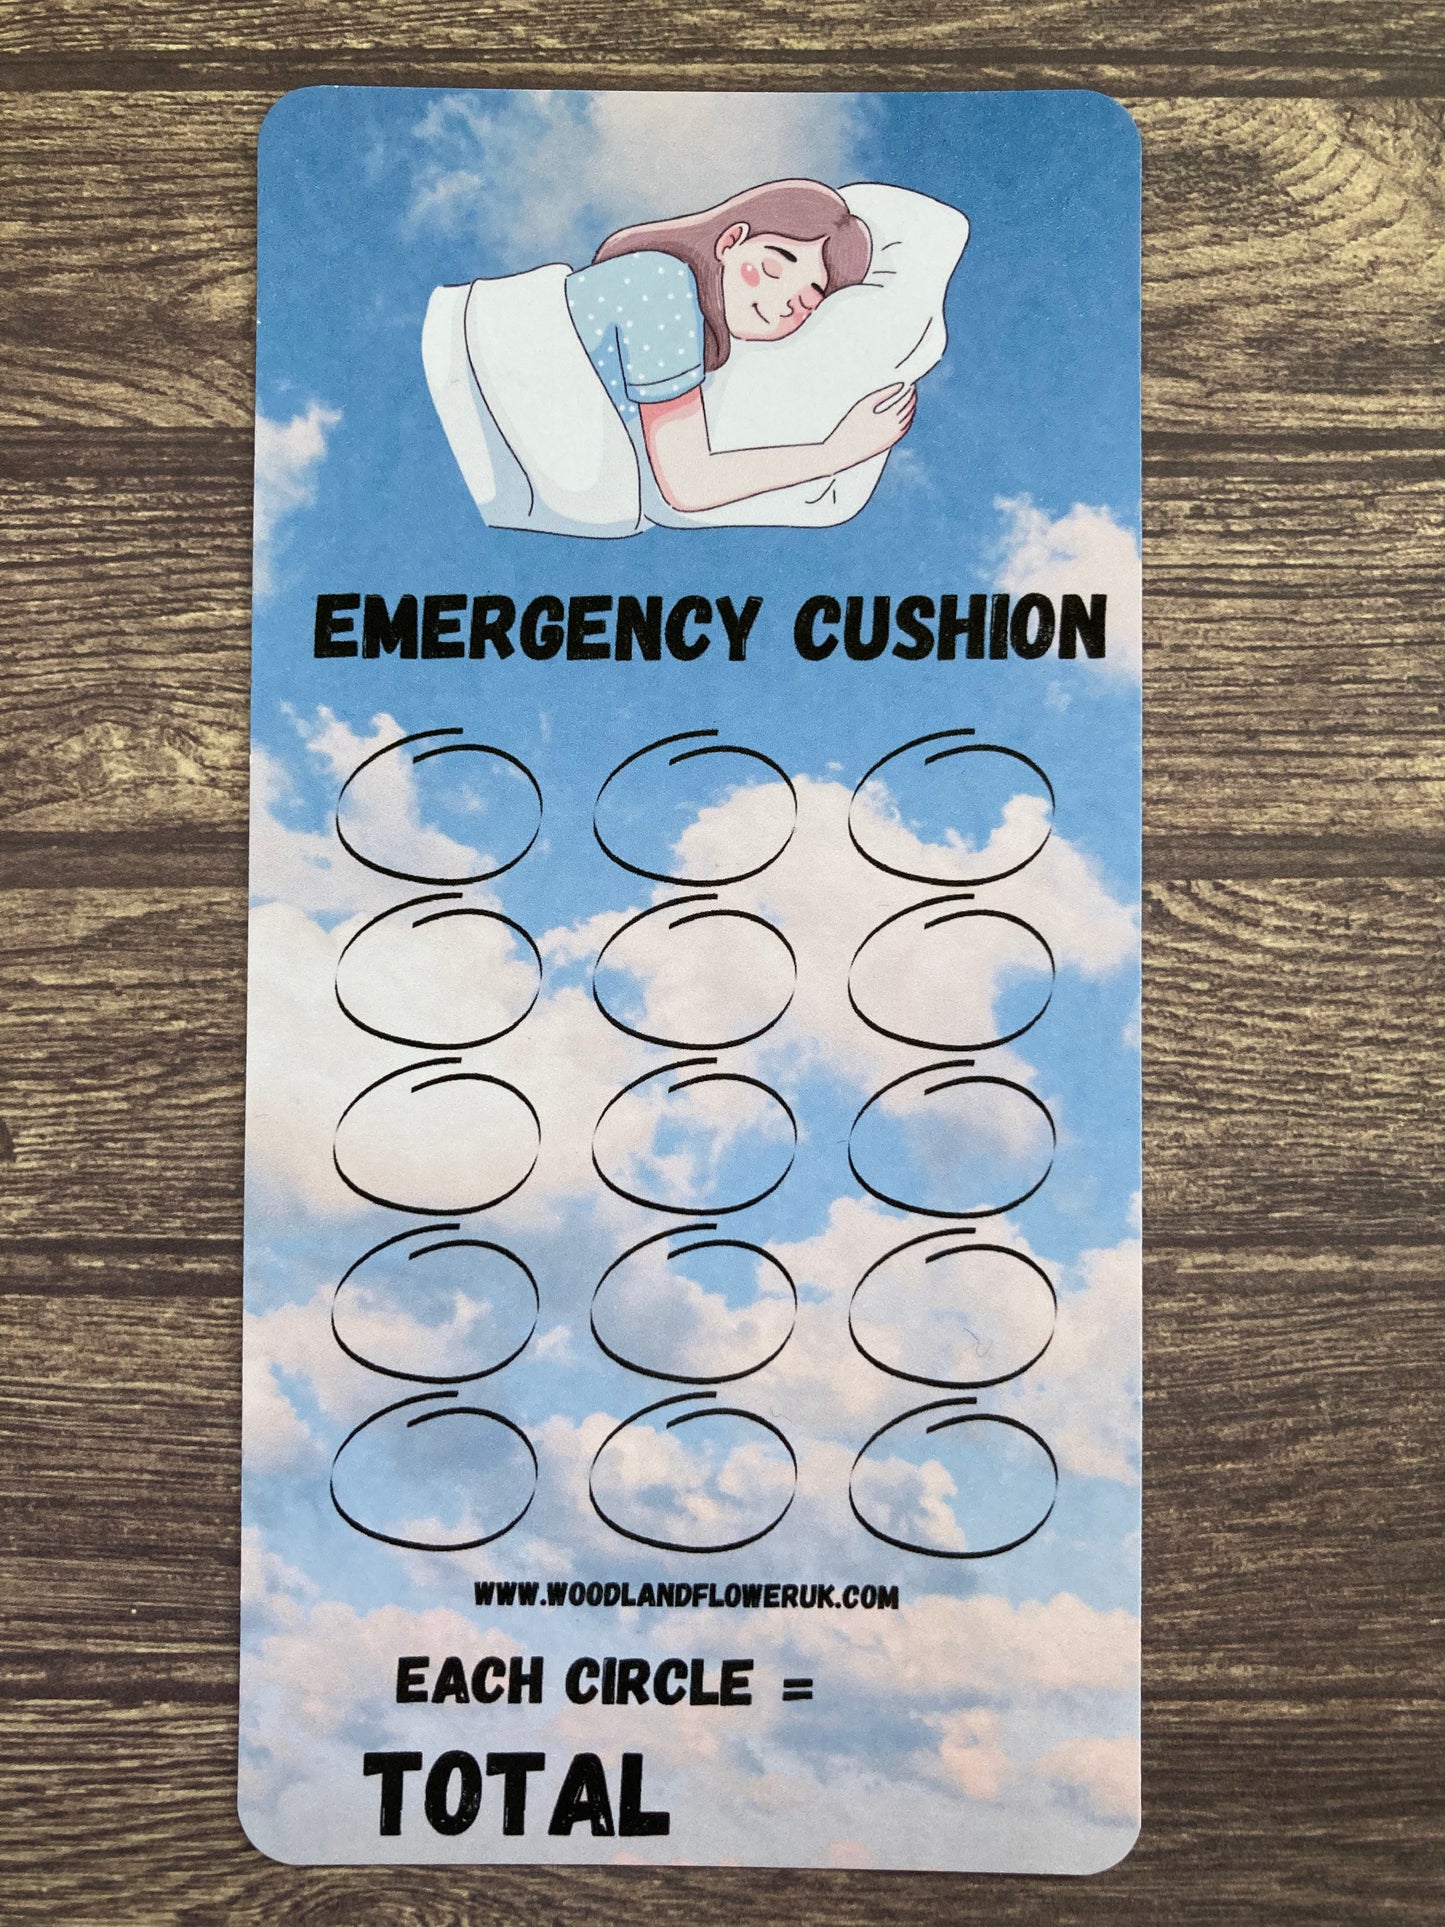 Saving challenge “emergency cushion”